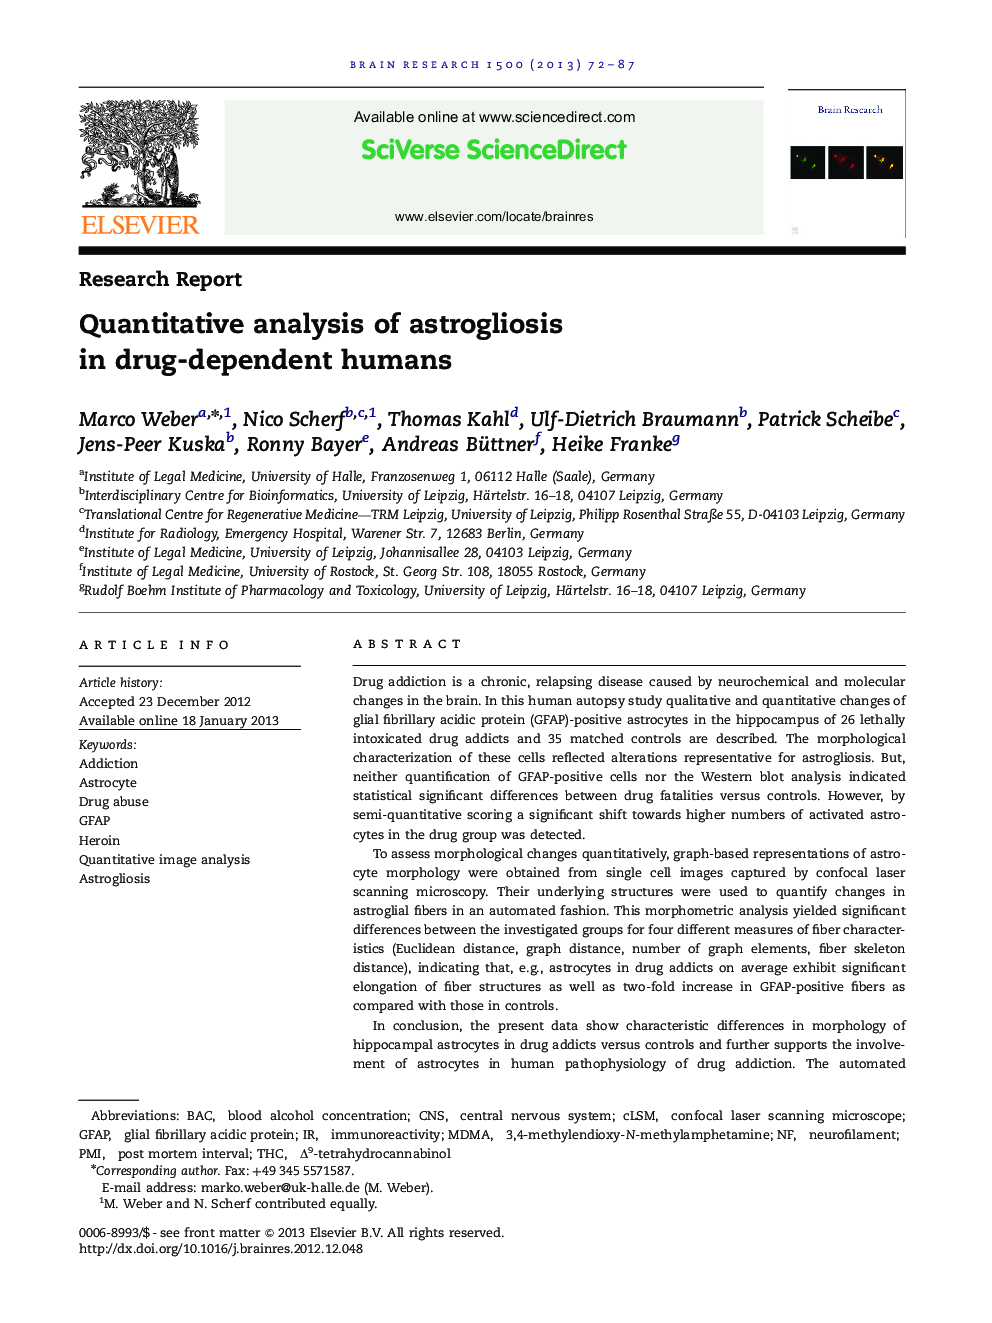 Quantitative analysis of astrogliosis in drug-dependent humans